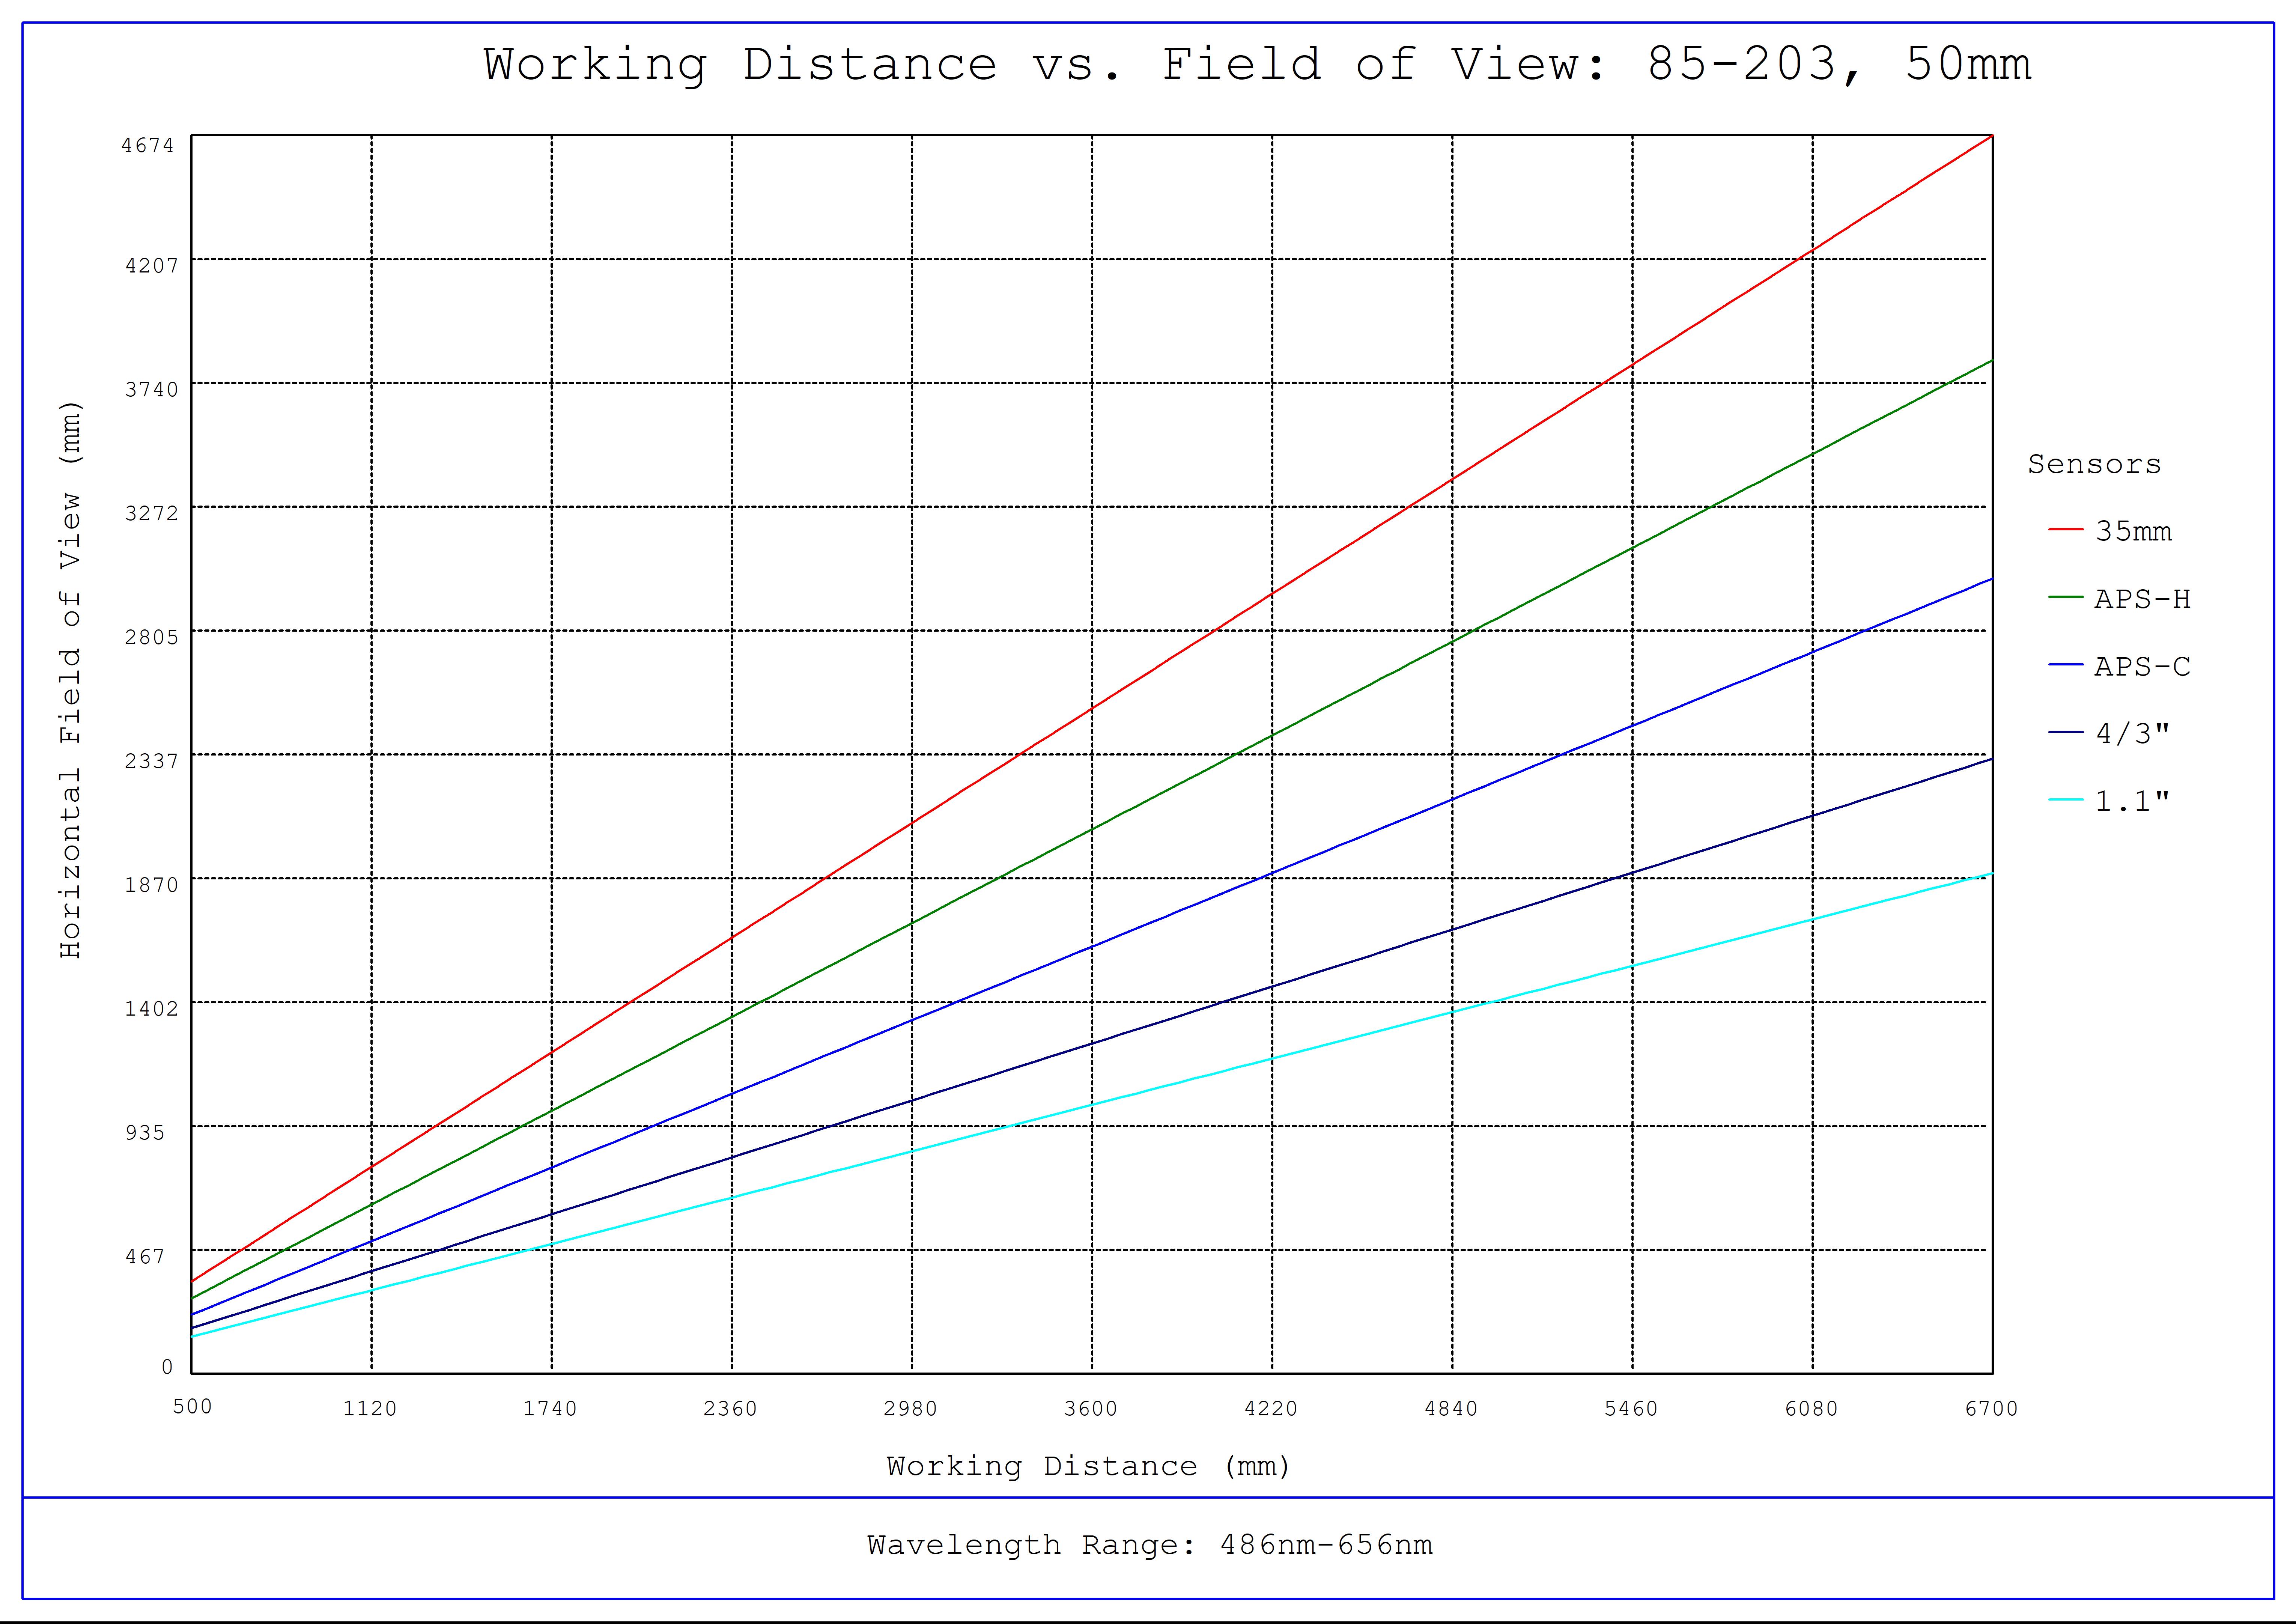 #85-203, 50mm Focal Length, LF Series Fixed Focal Length Lens, Working Distance versus Field of View Plot